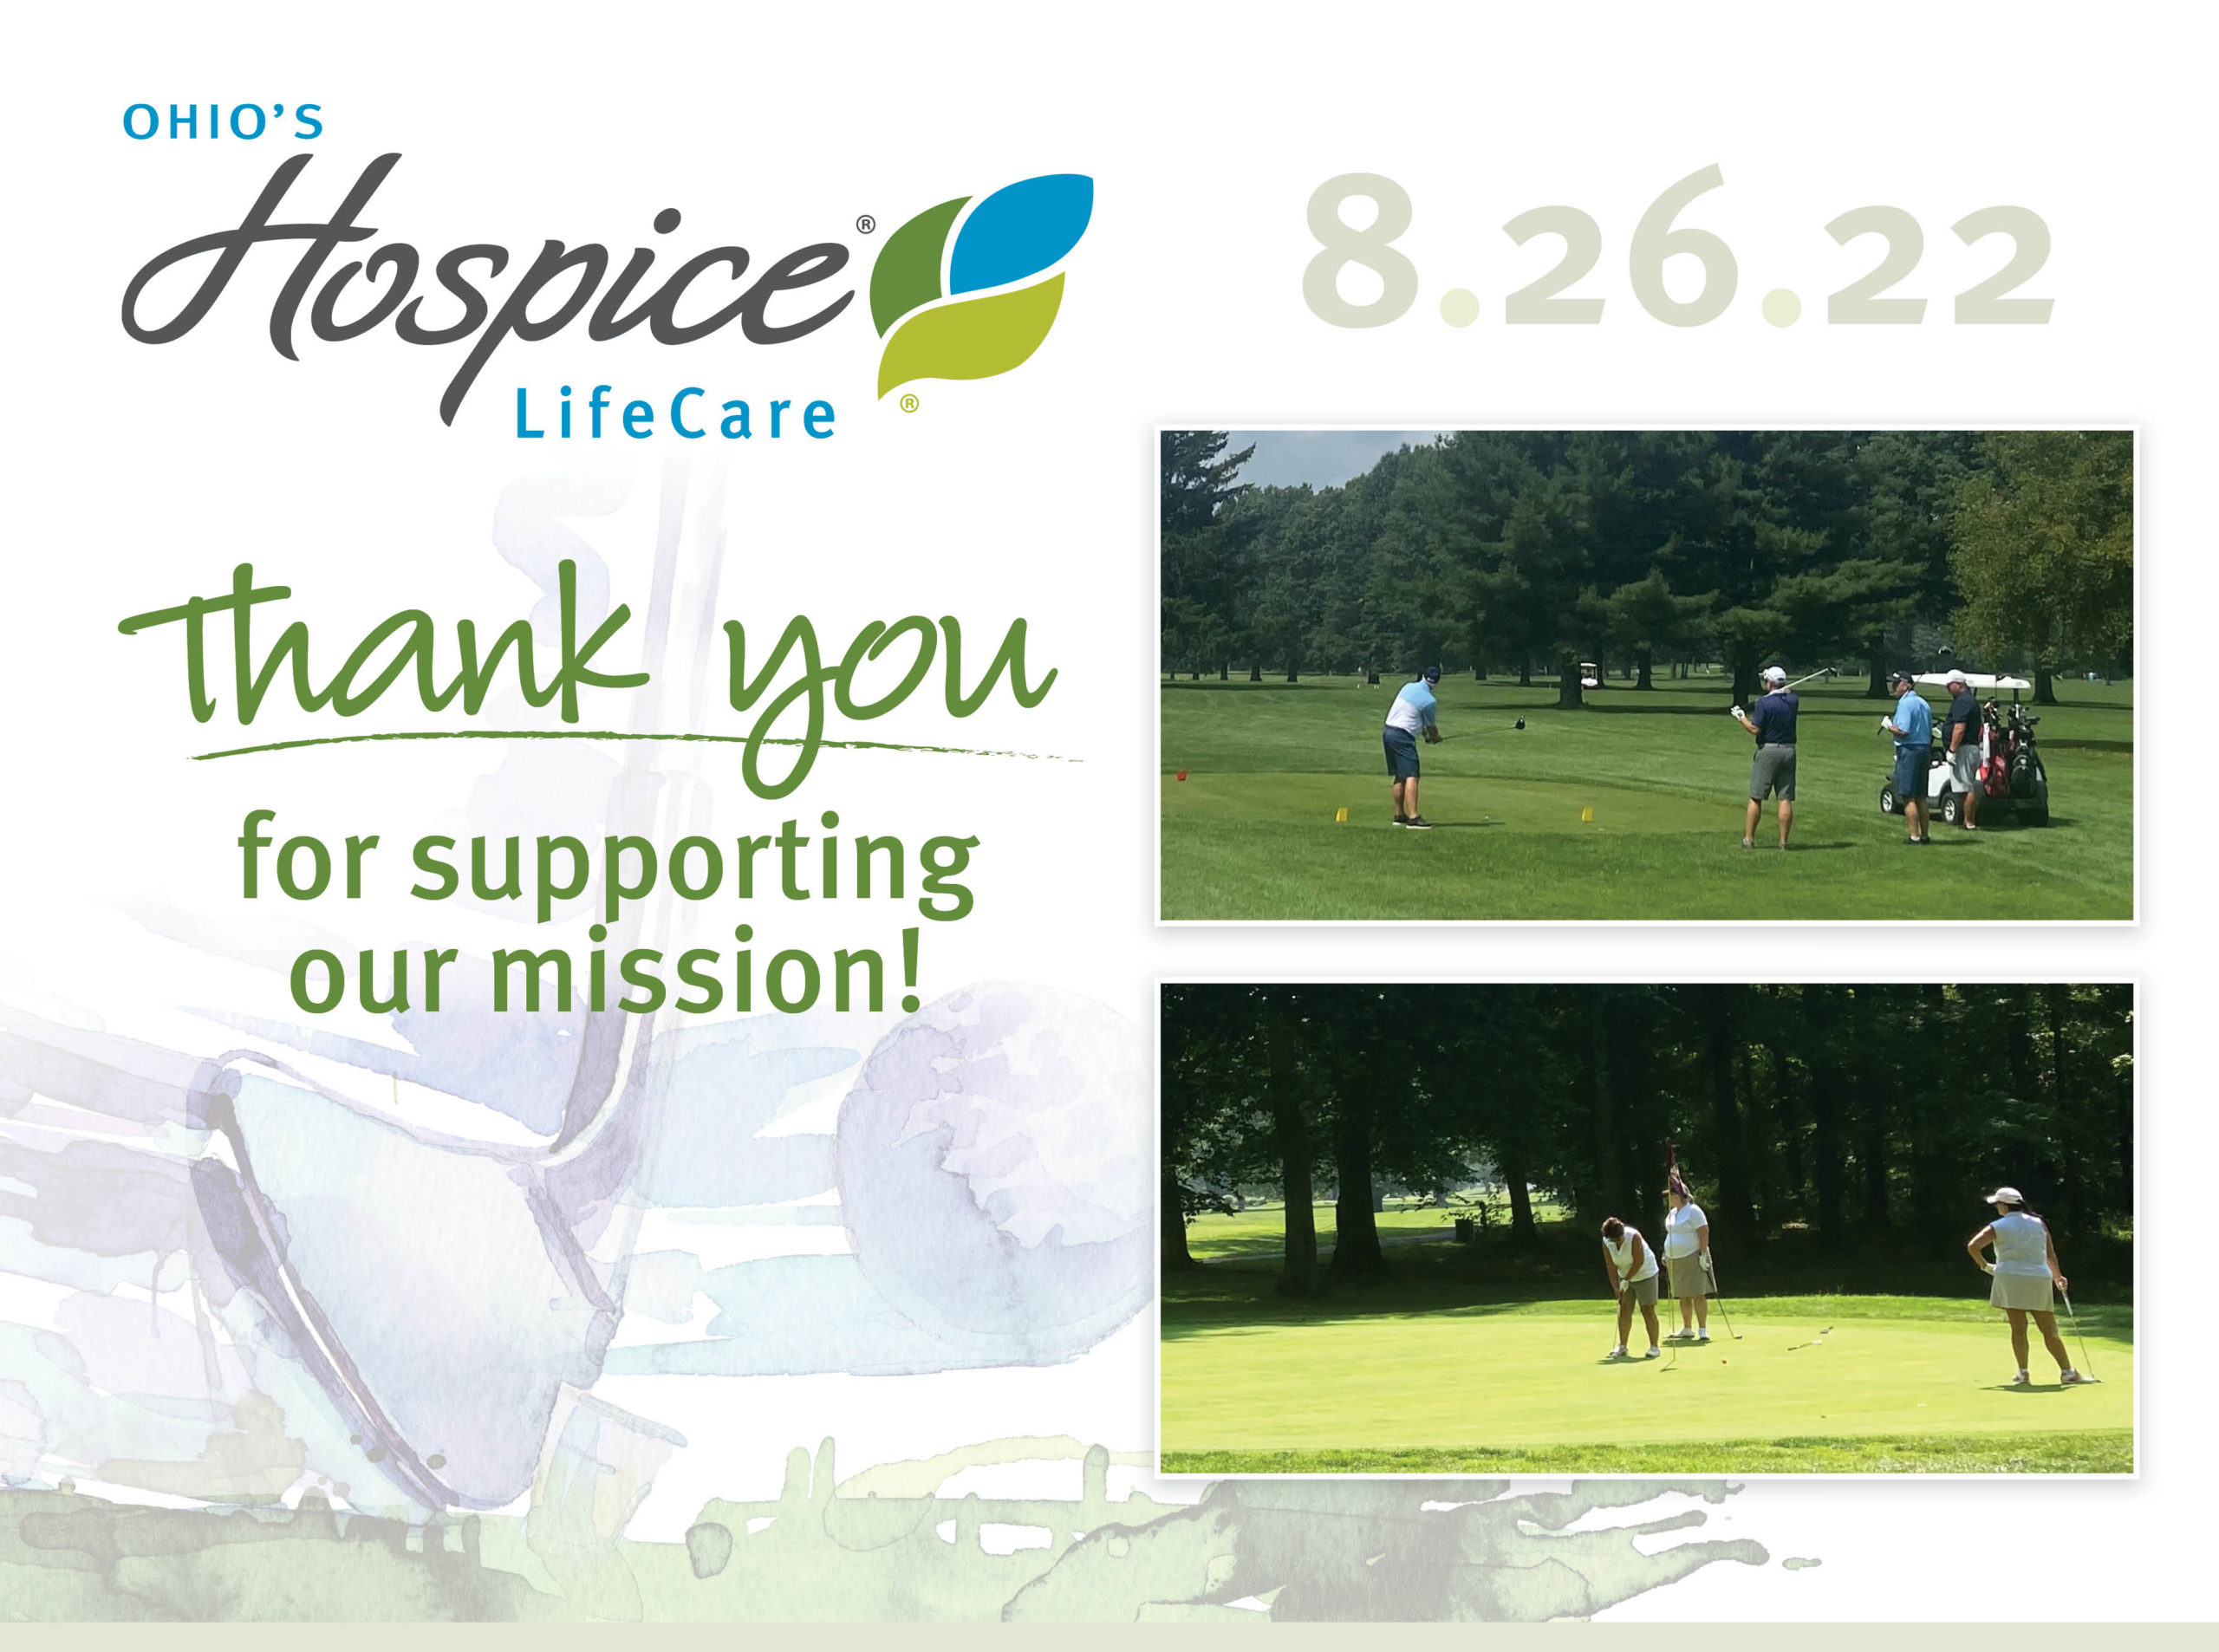 Ohio's Hospice LifeCare Golf Classic Raises Funds for Patient Care